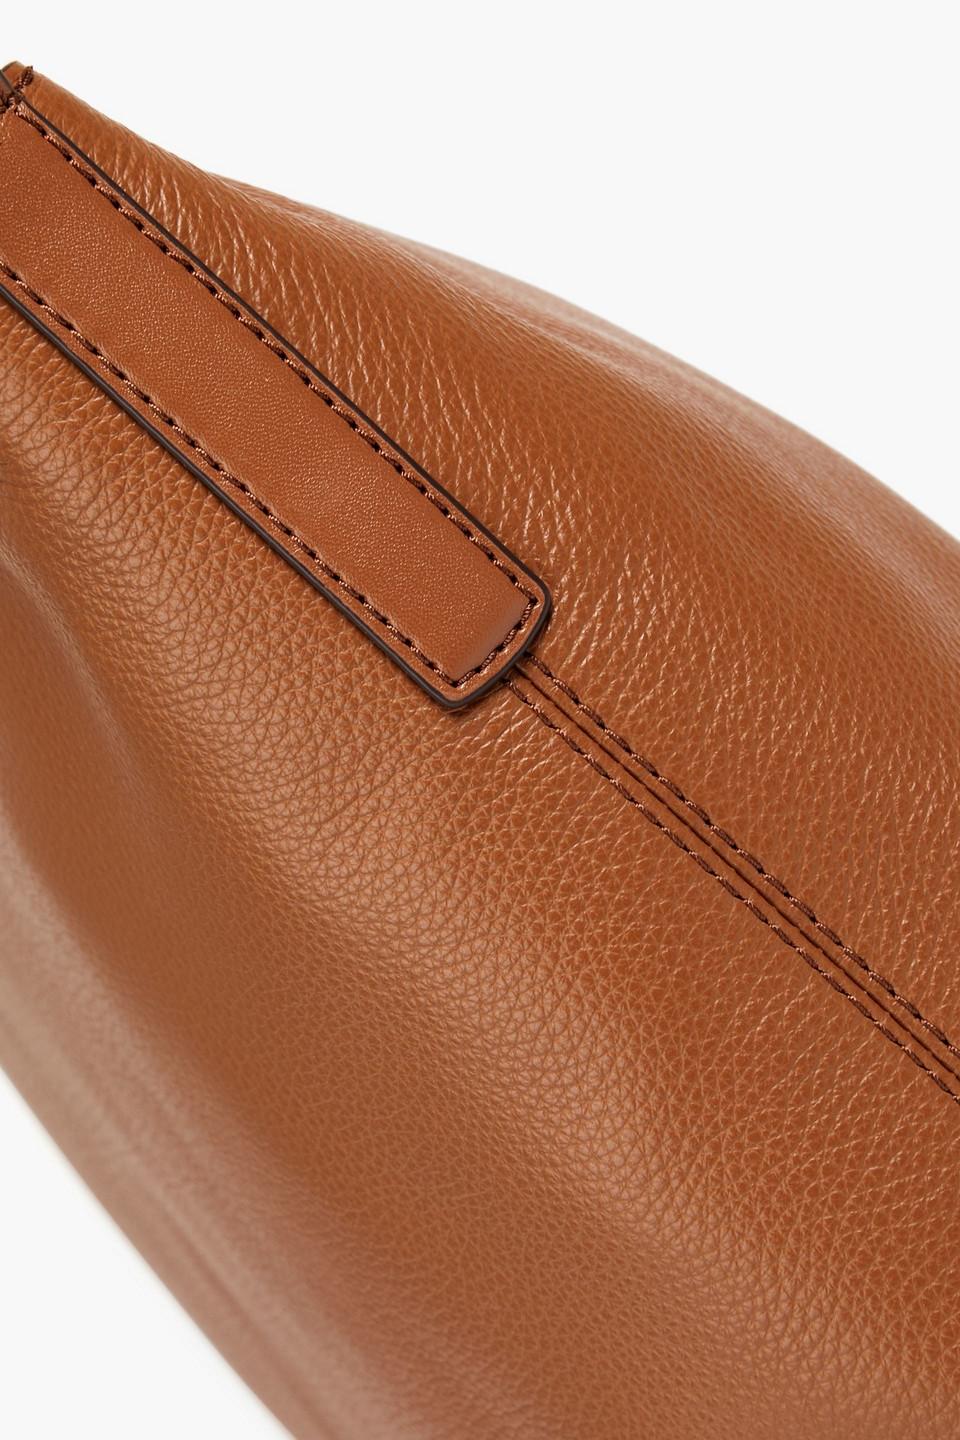 MICHAEL Kors Lexington Pebbled-leather Shoulder Bag in Brown UK